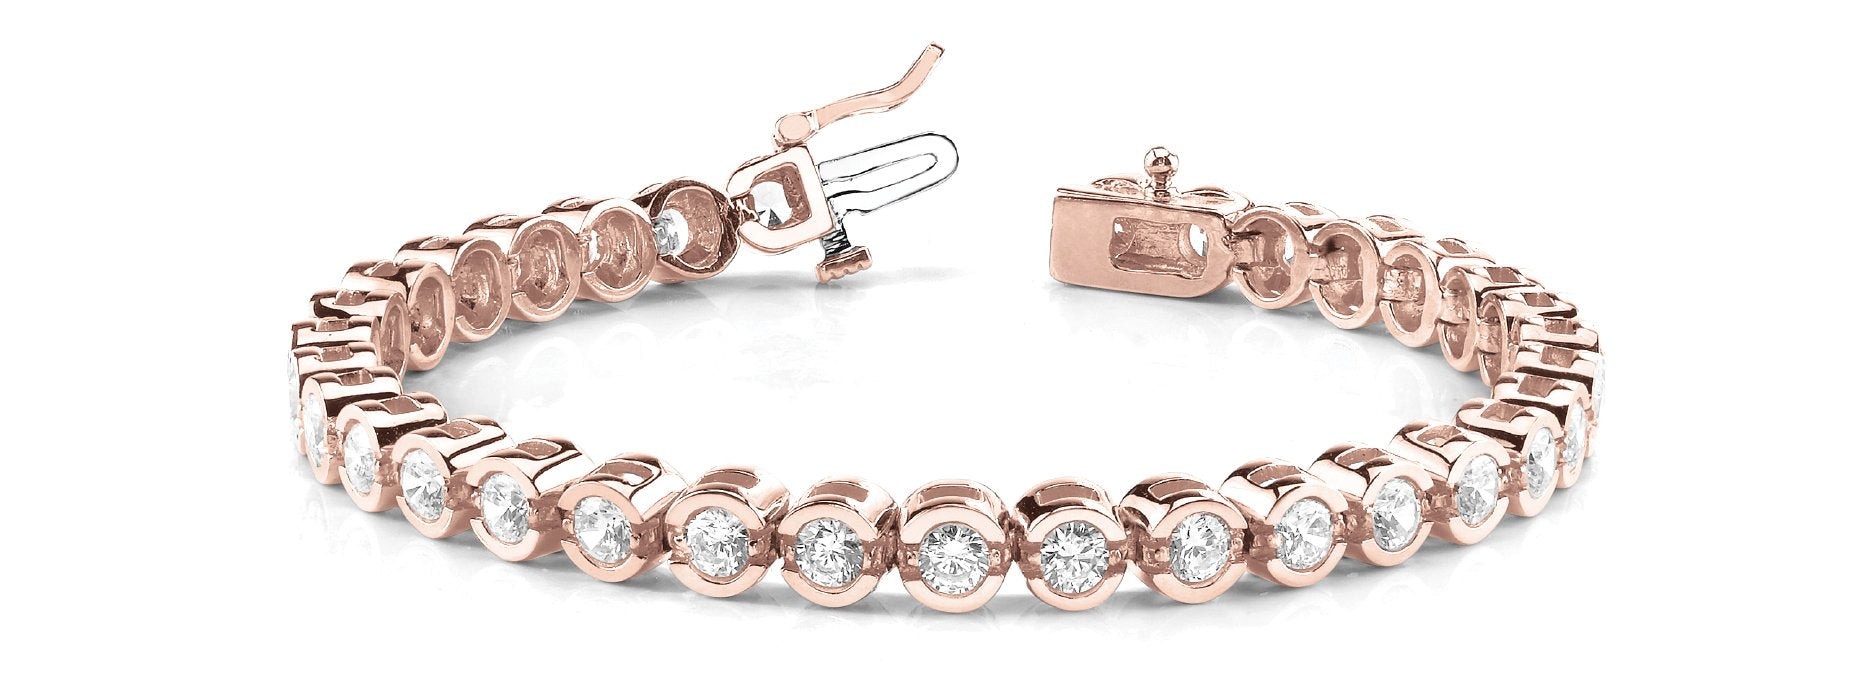 Fancy Diamond Bracelet Ladies 5.89ct tw - 14kt Rose Gold